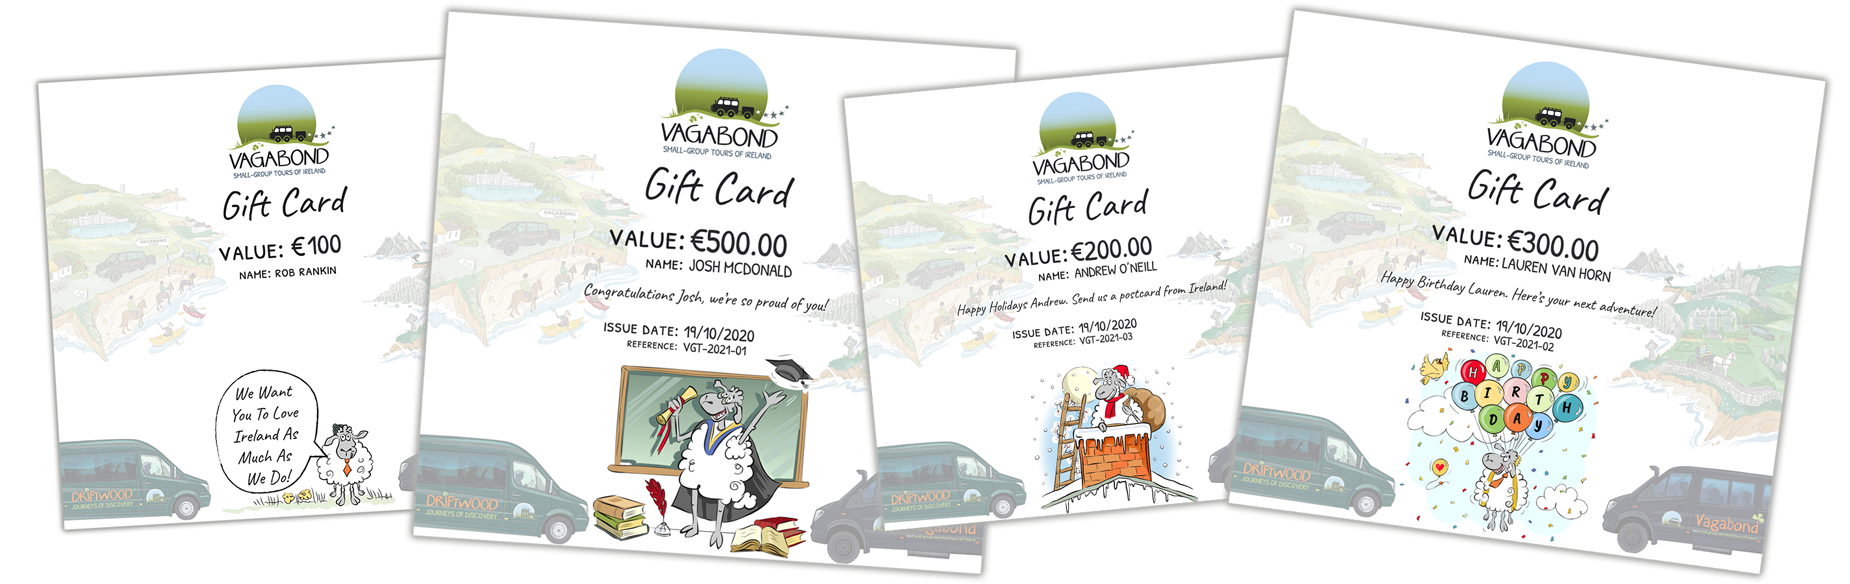 Vagabond Tours of Ireland Gift Cards